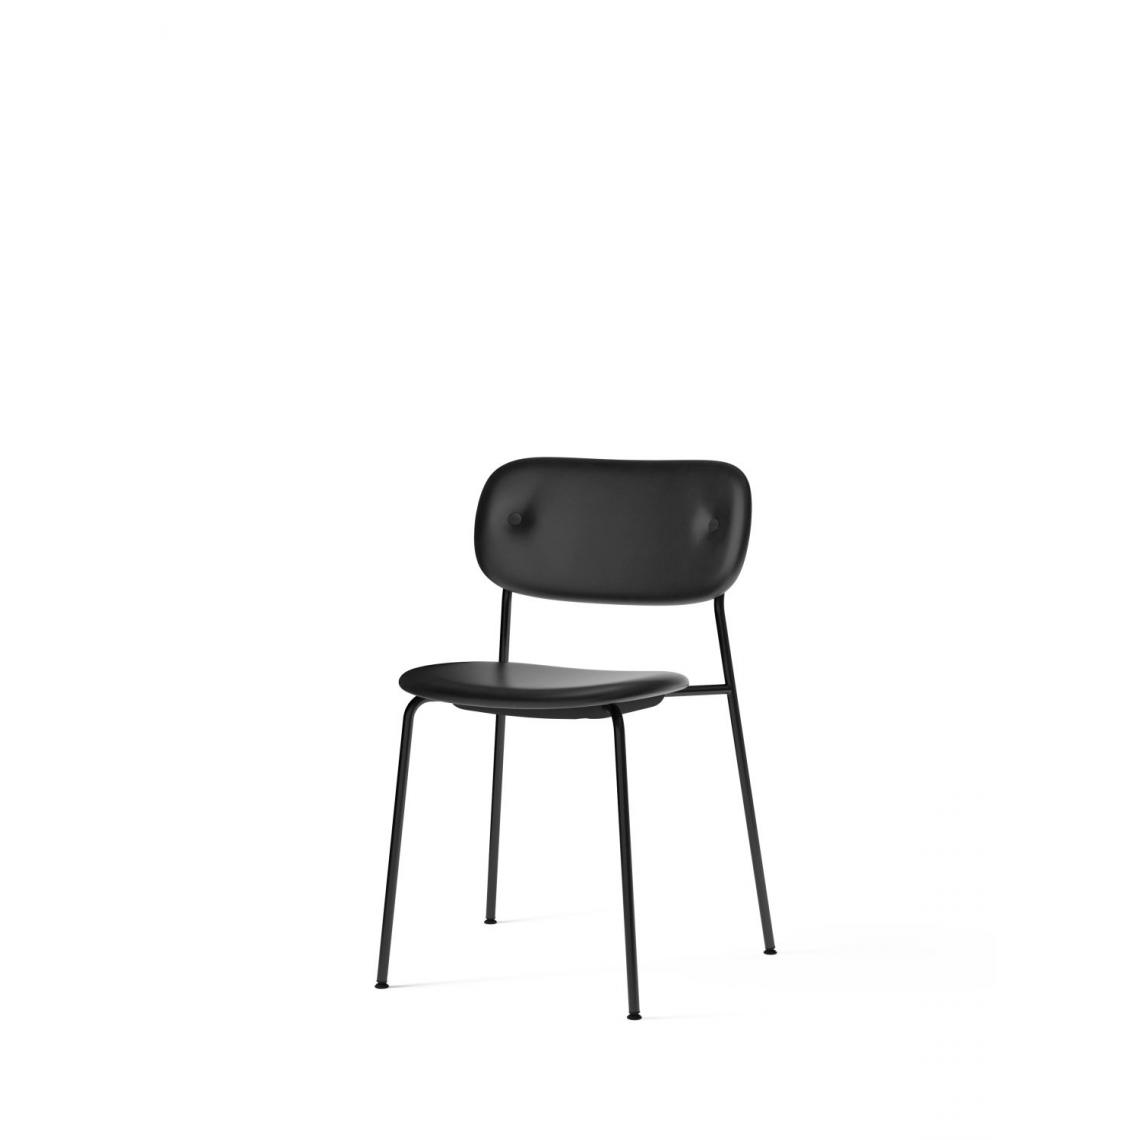 Menu - Co Dining Chair - MenuCoChairDakar0842 - noir - Chaises